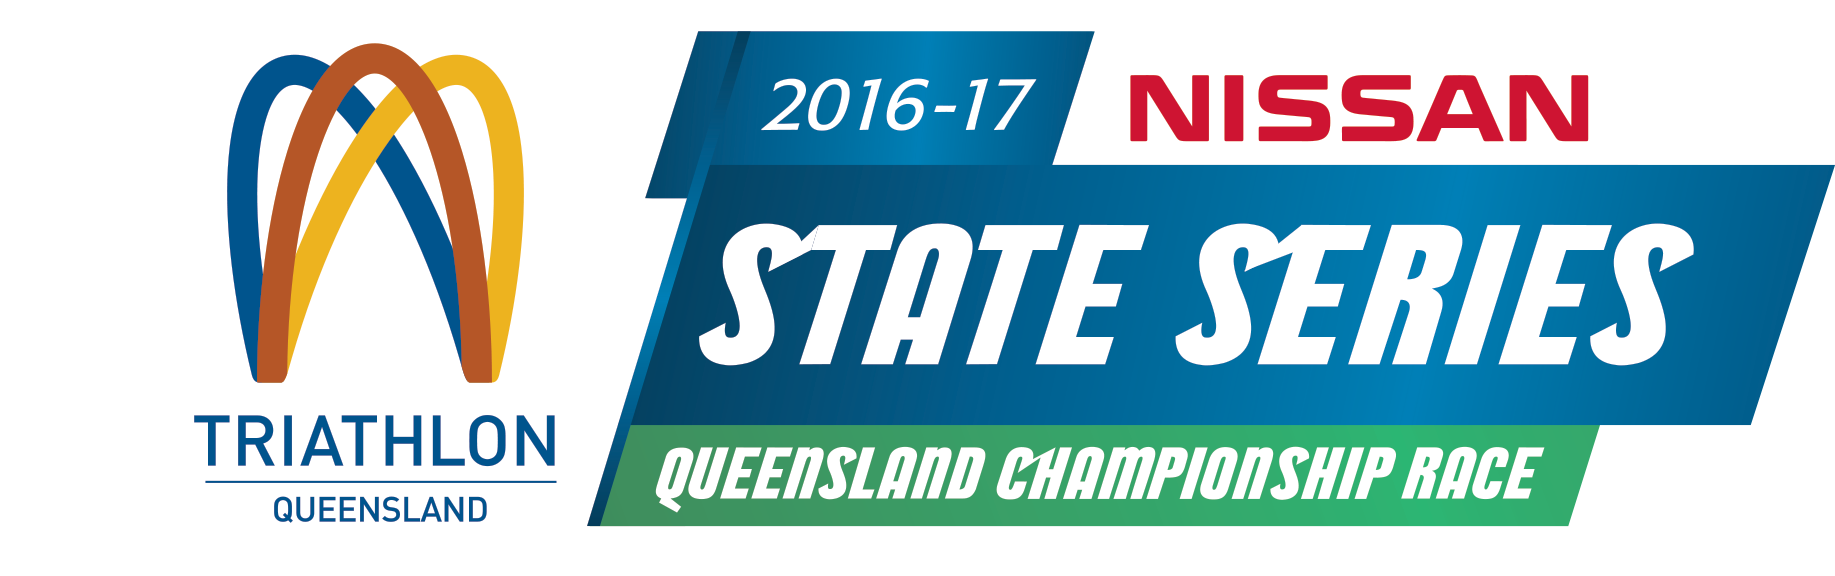 Nissan State Series Queensland Championship